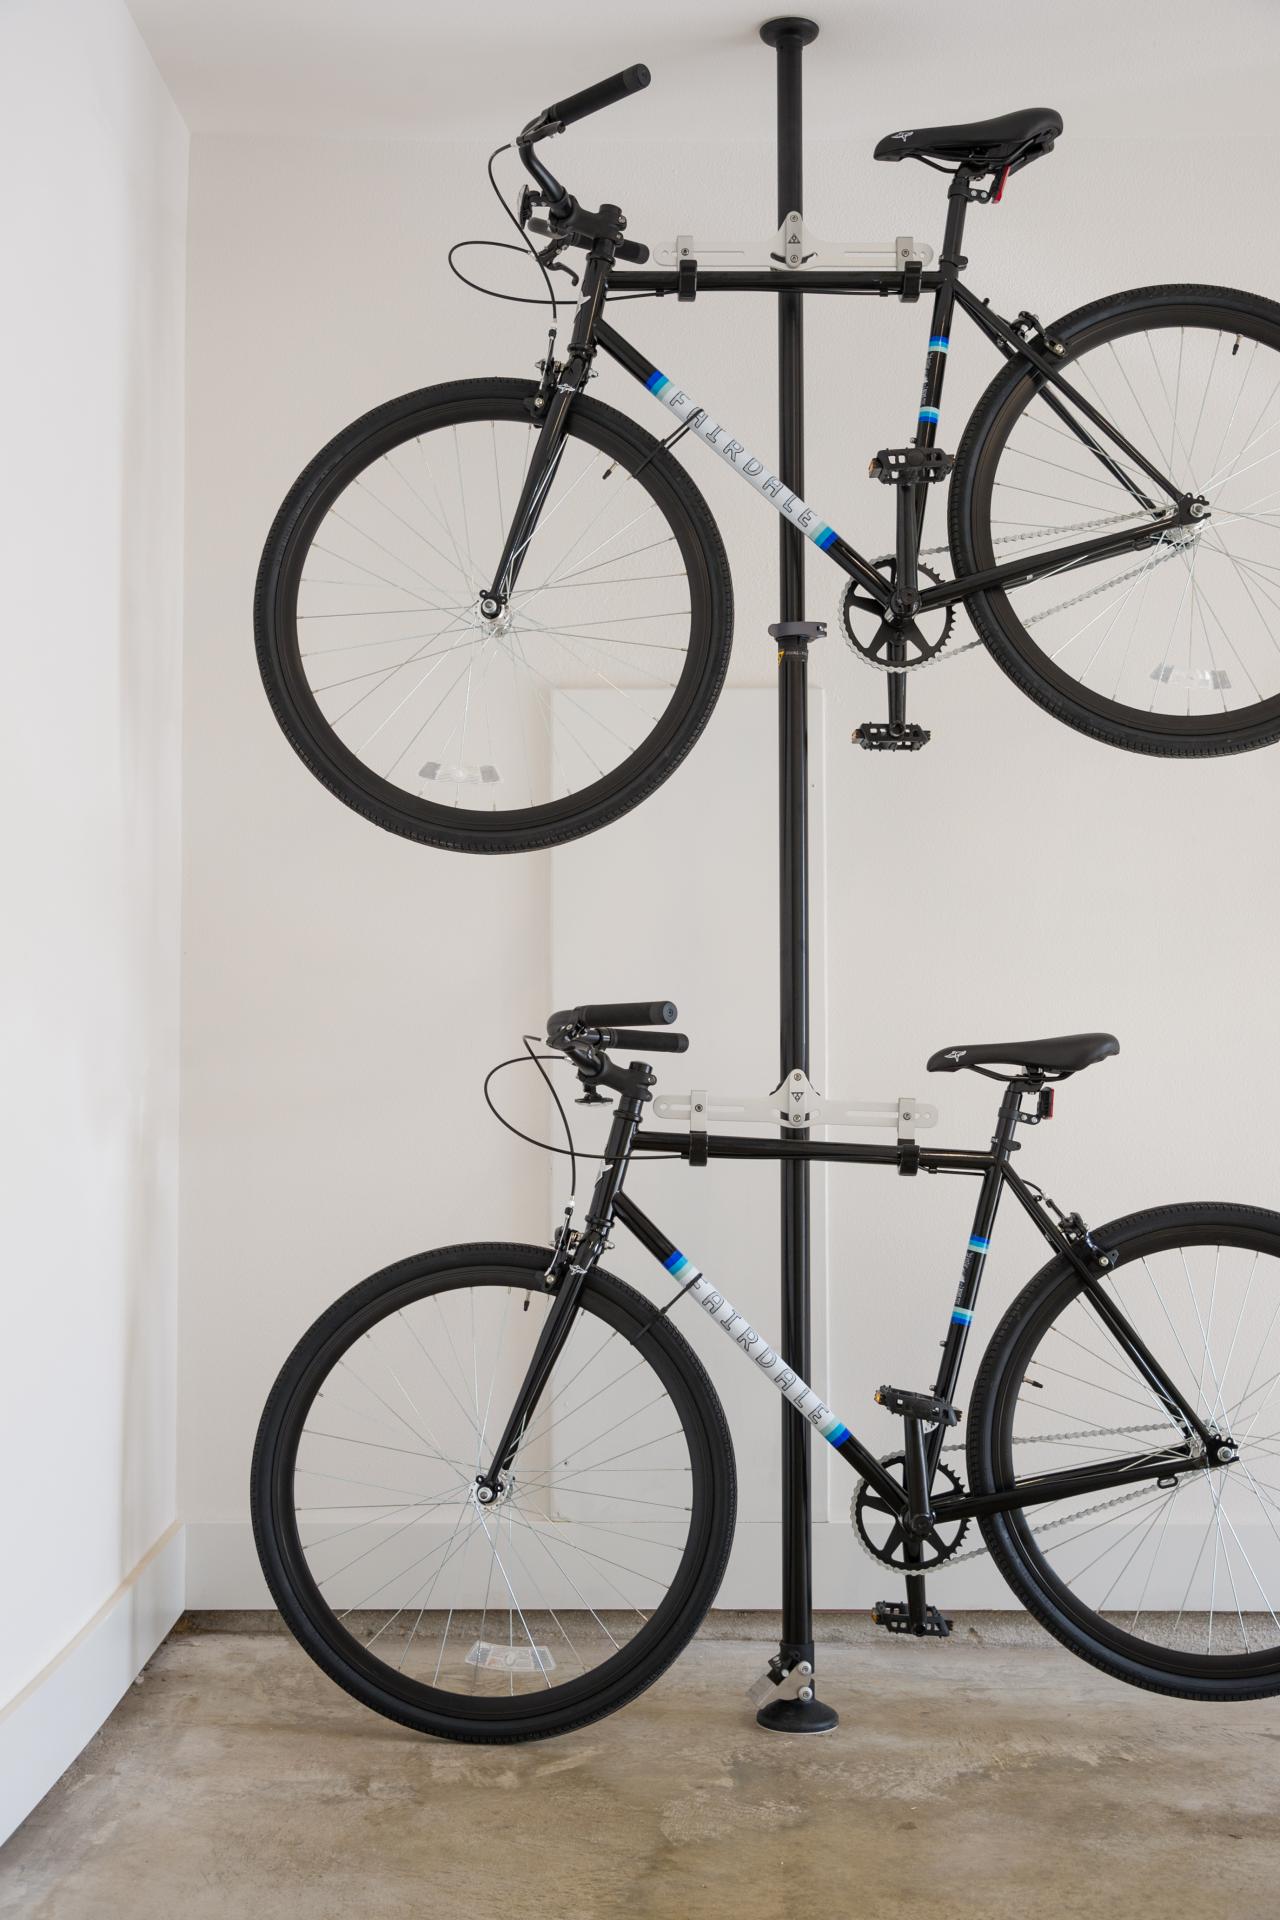 Efficient Bike Storage: A Perk for Rental Property Residents